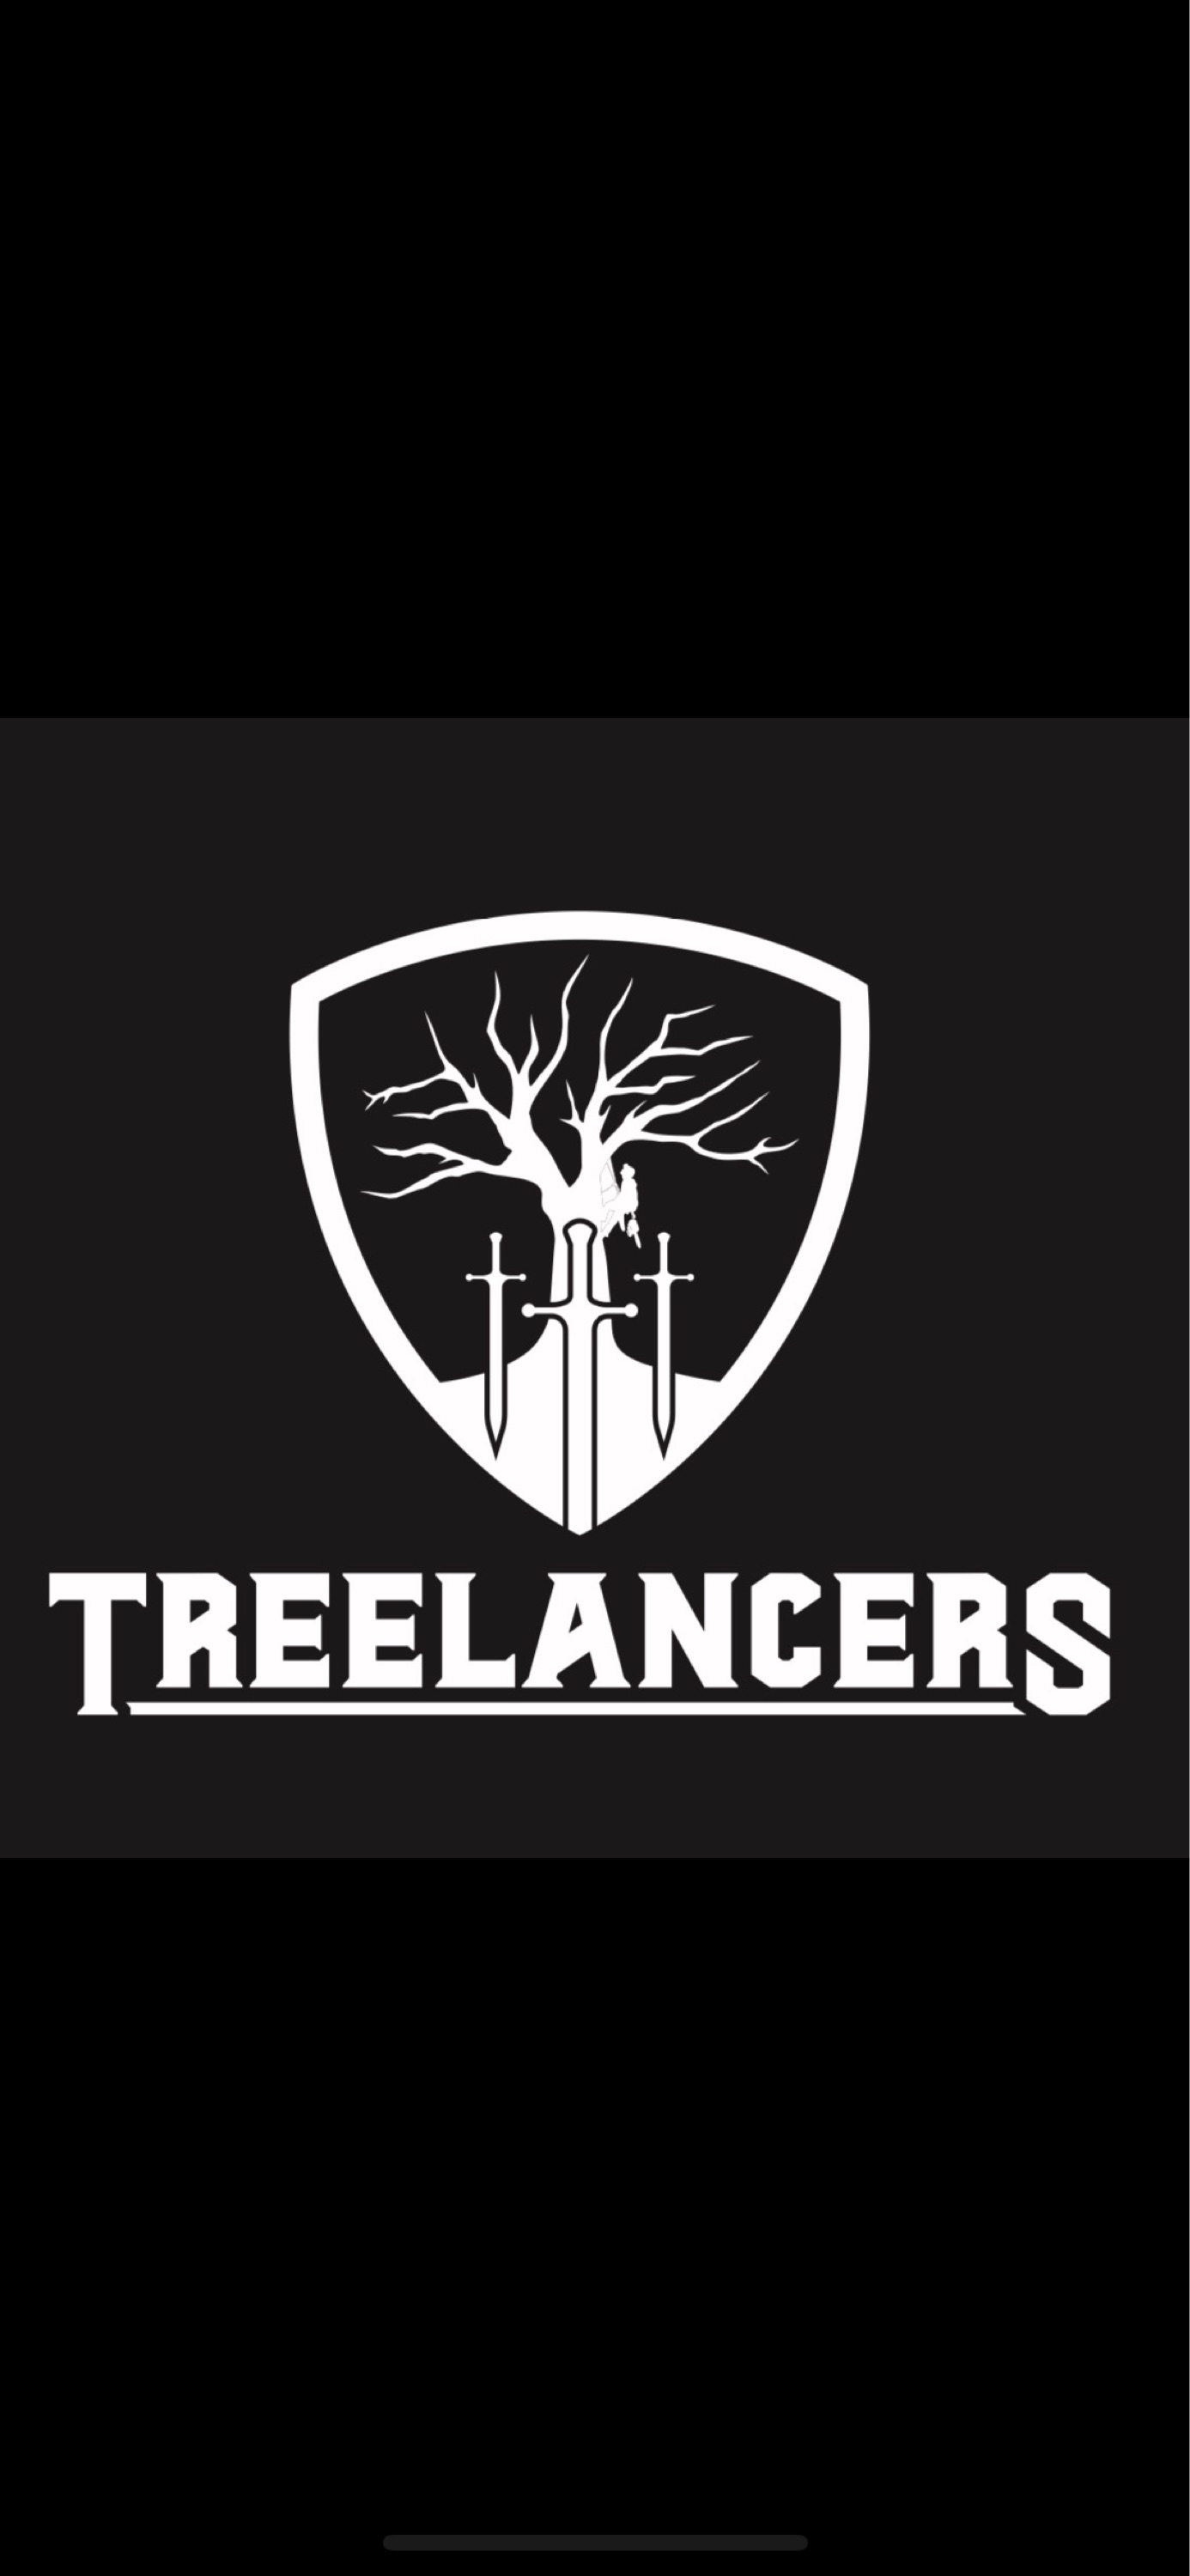 TreeLancers - Tree Cutting Service Logo